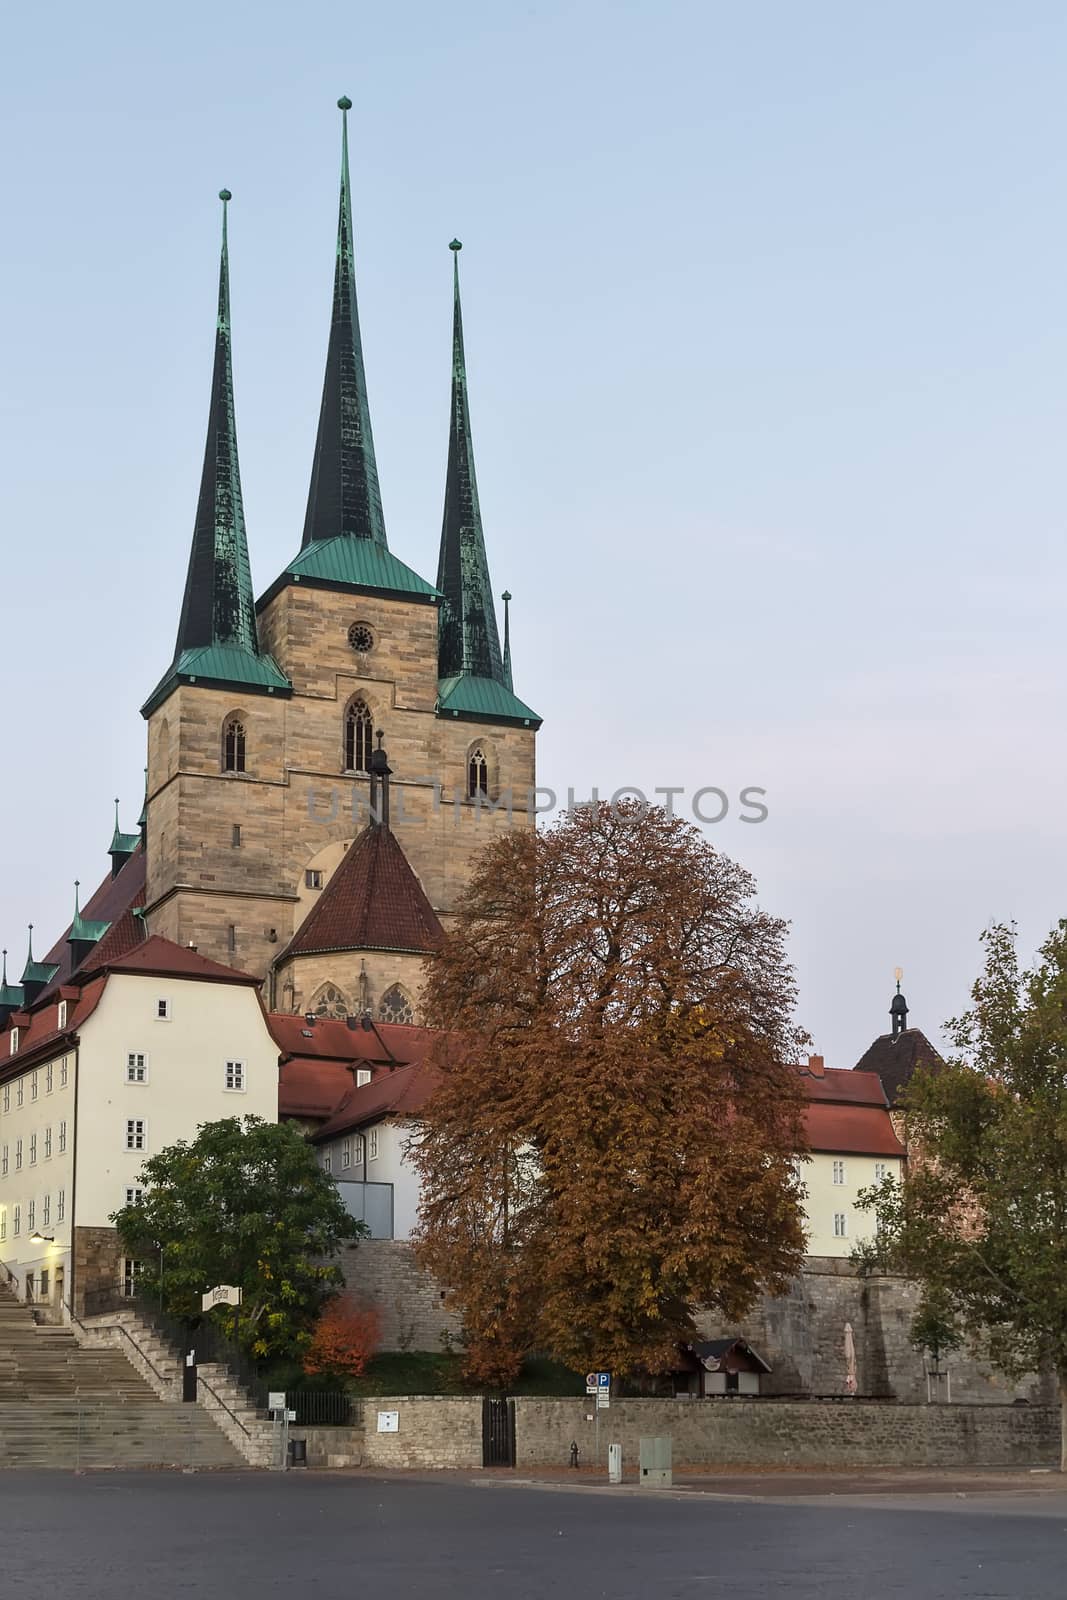 The Severikirche has Romanesque origins, having been built in 1148 as a collegiate church. 